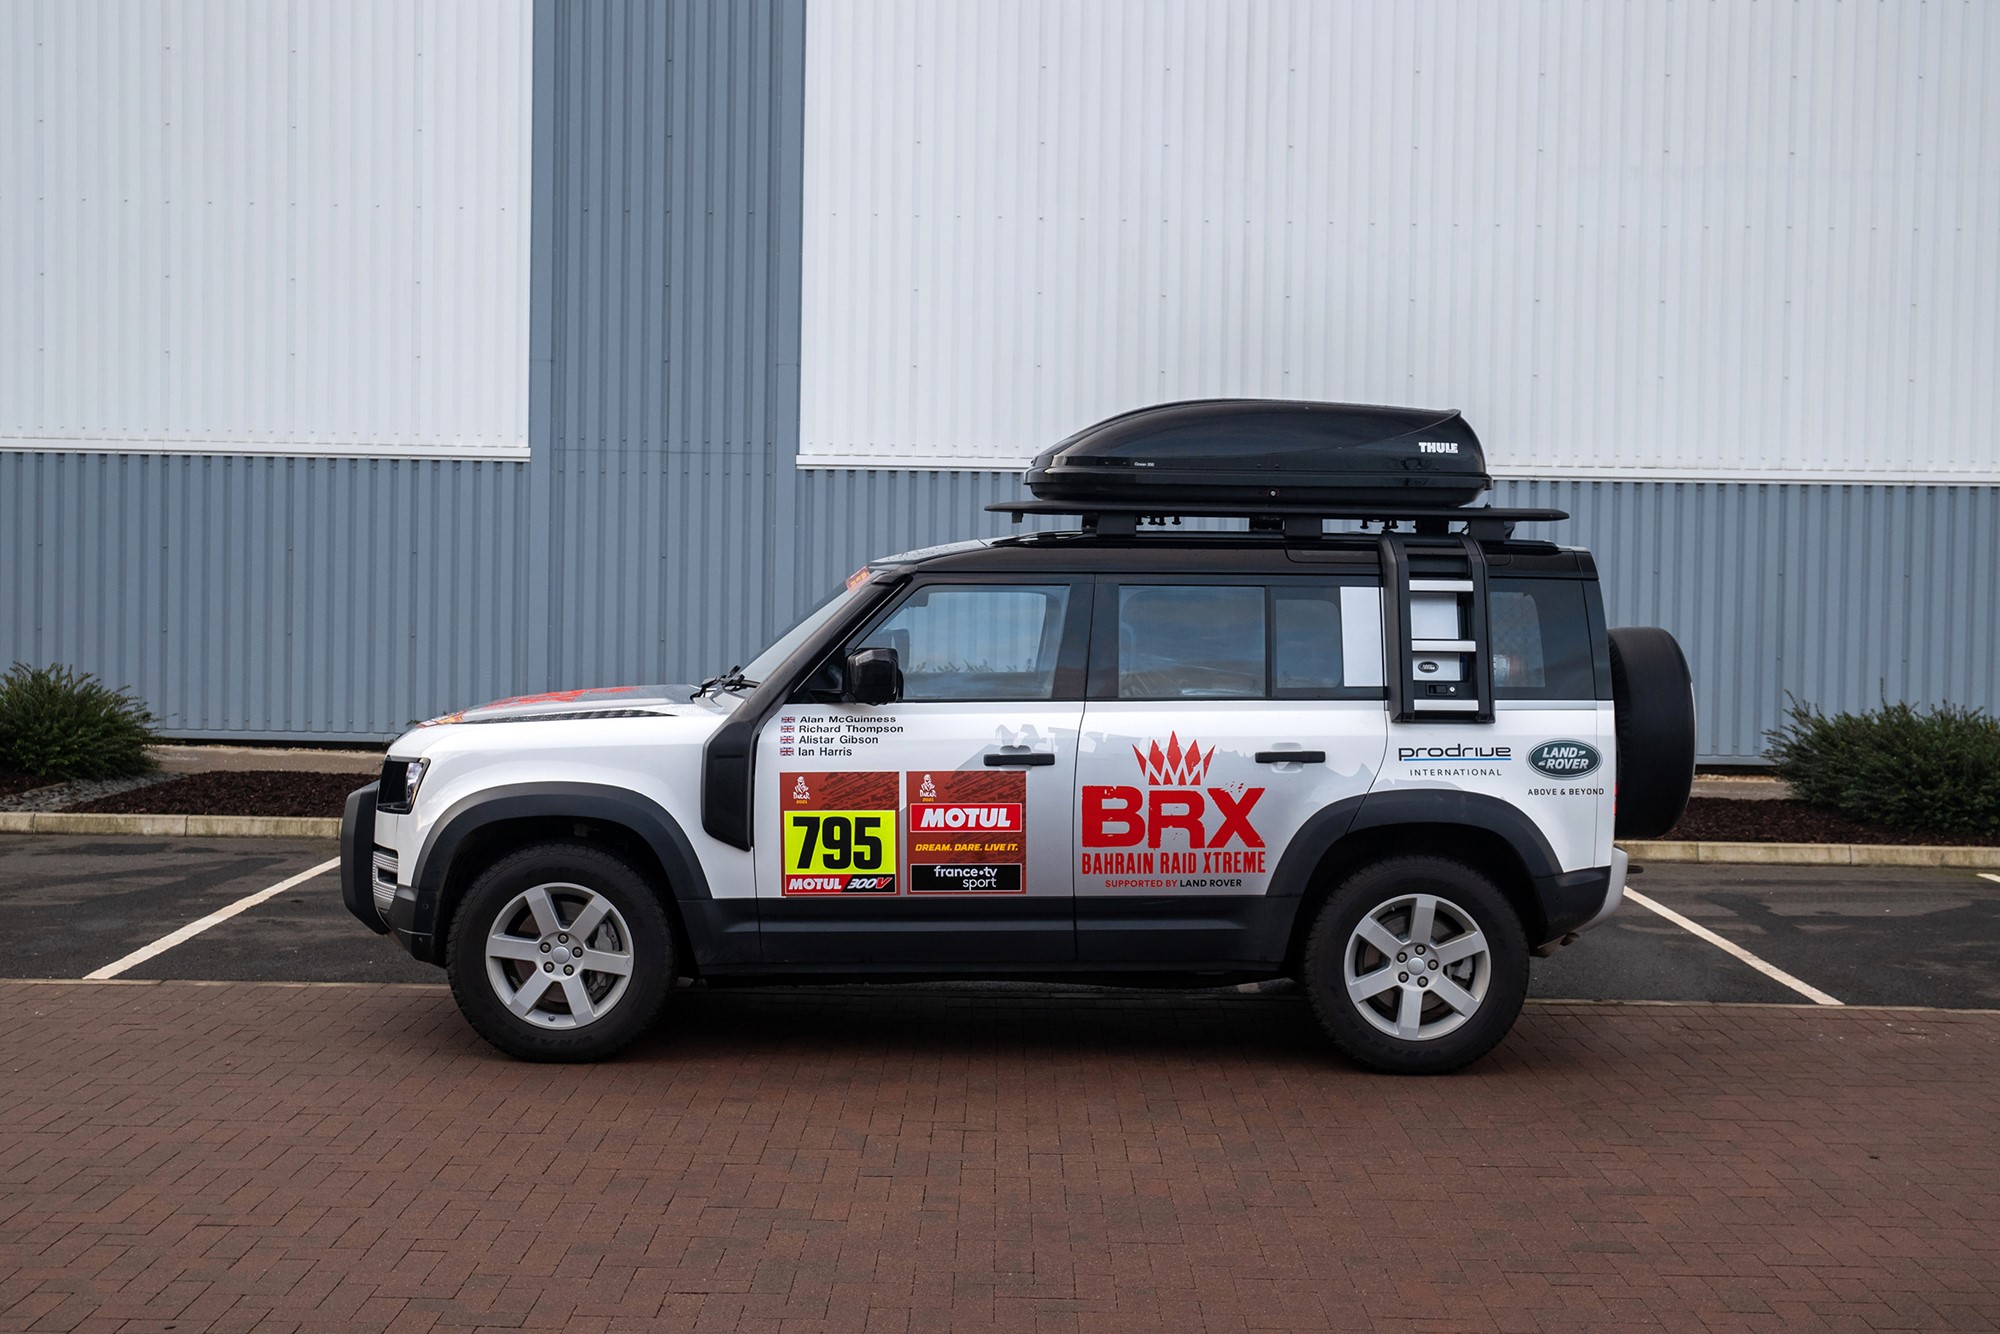 Land Rover Defender returns to the Dakar Rally in 2021